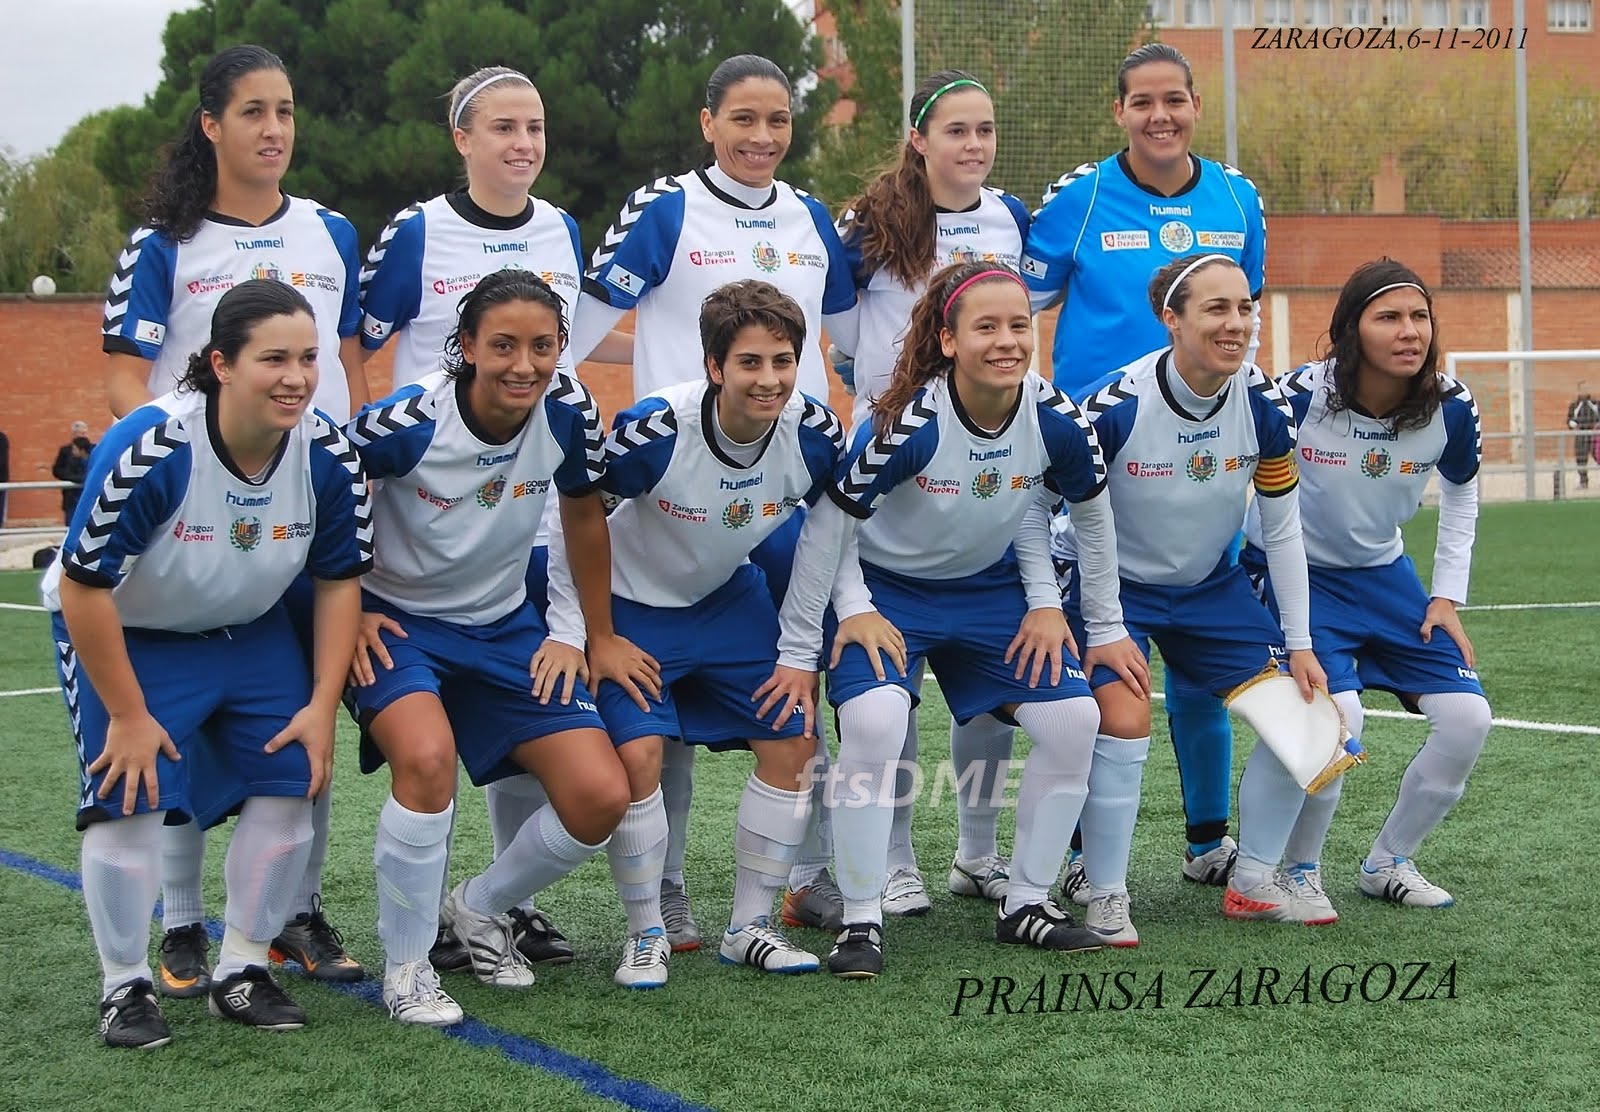 Fútbol Femenino...el futuro es nuestro.: C.D. PRAINSA ZARAGOZA 0 - F.C. BARCELONA 4